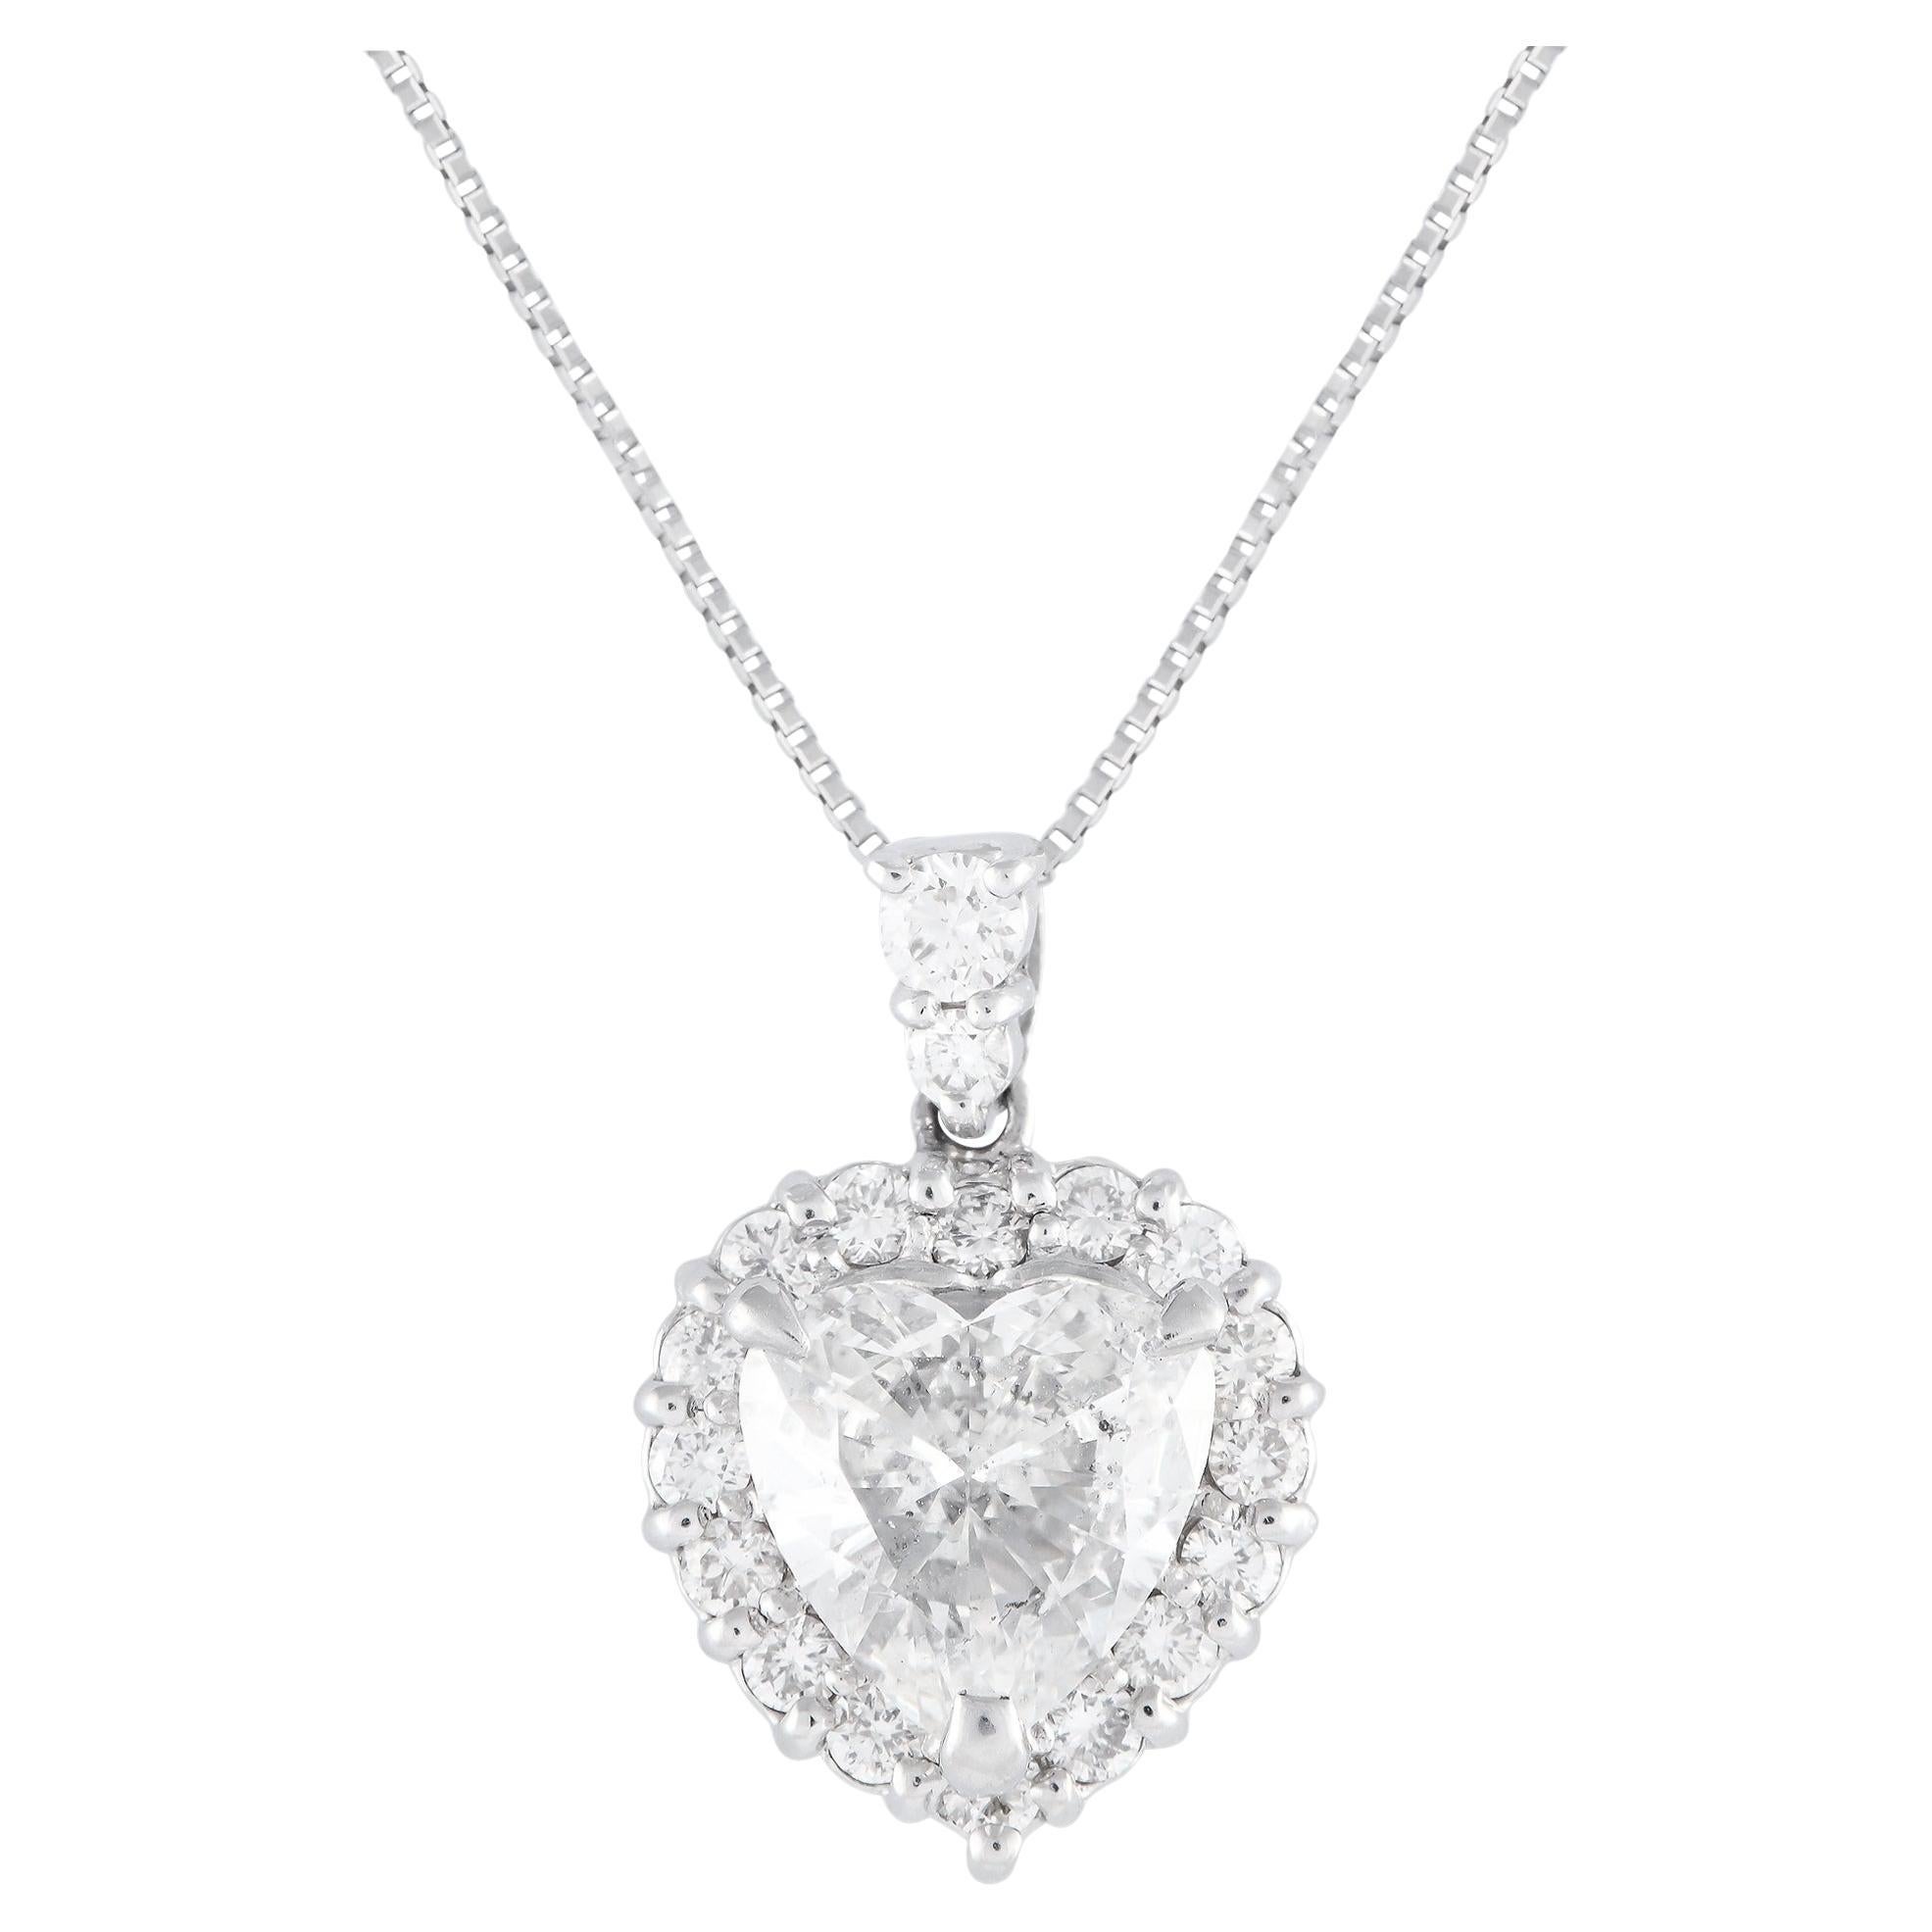 18K White Gold 1.33ct Diamond Pendant Necklace